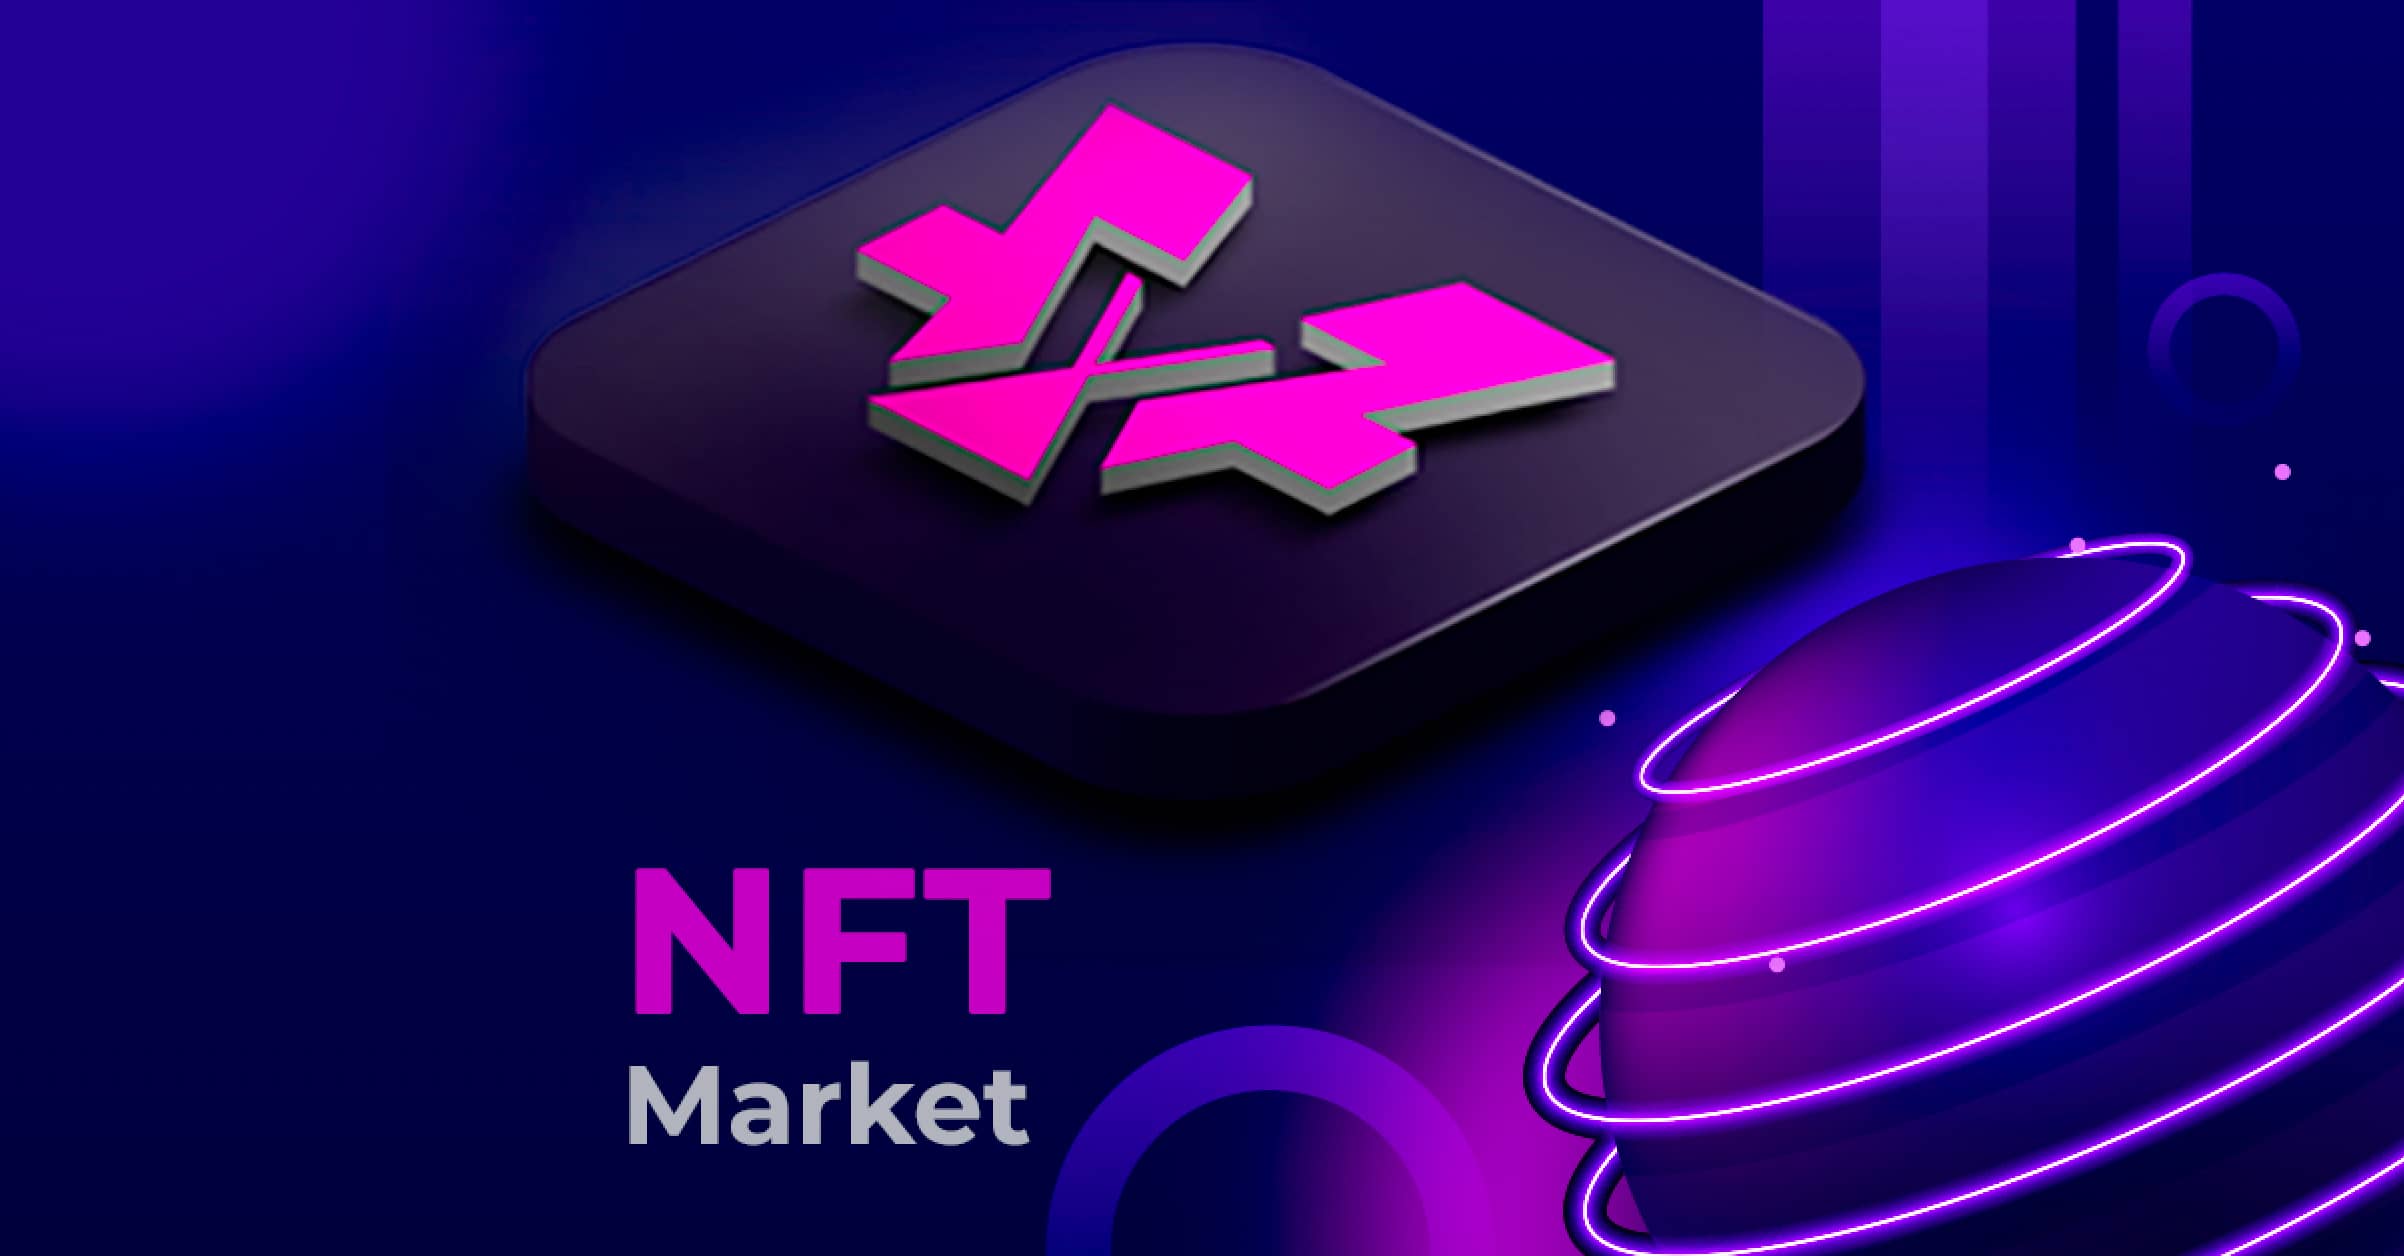 VIDYX entering the NFT Market - Collaboration of Vidy and Binance to Build NFT Platform